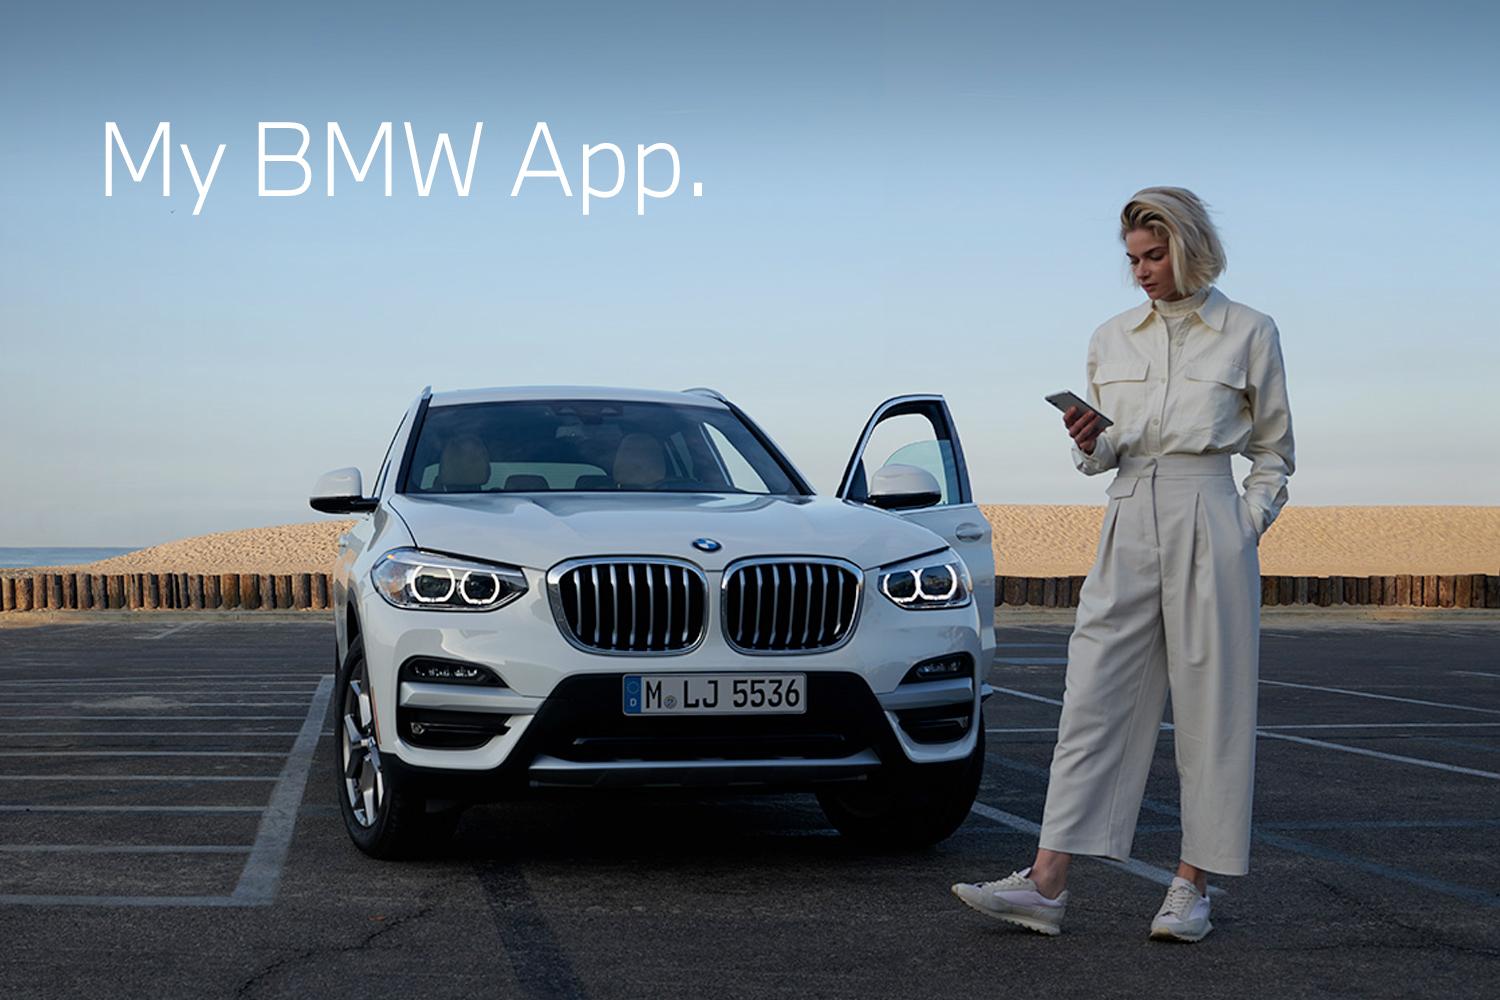 My BMW App.'